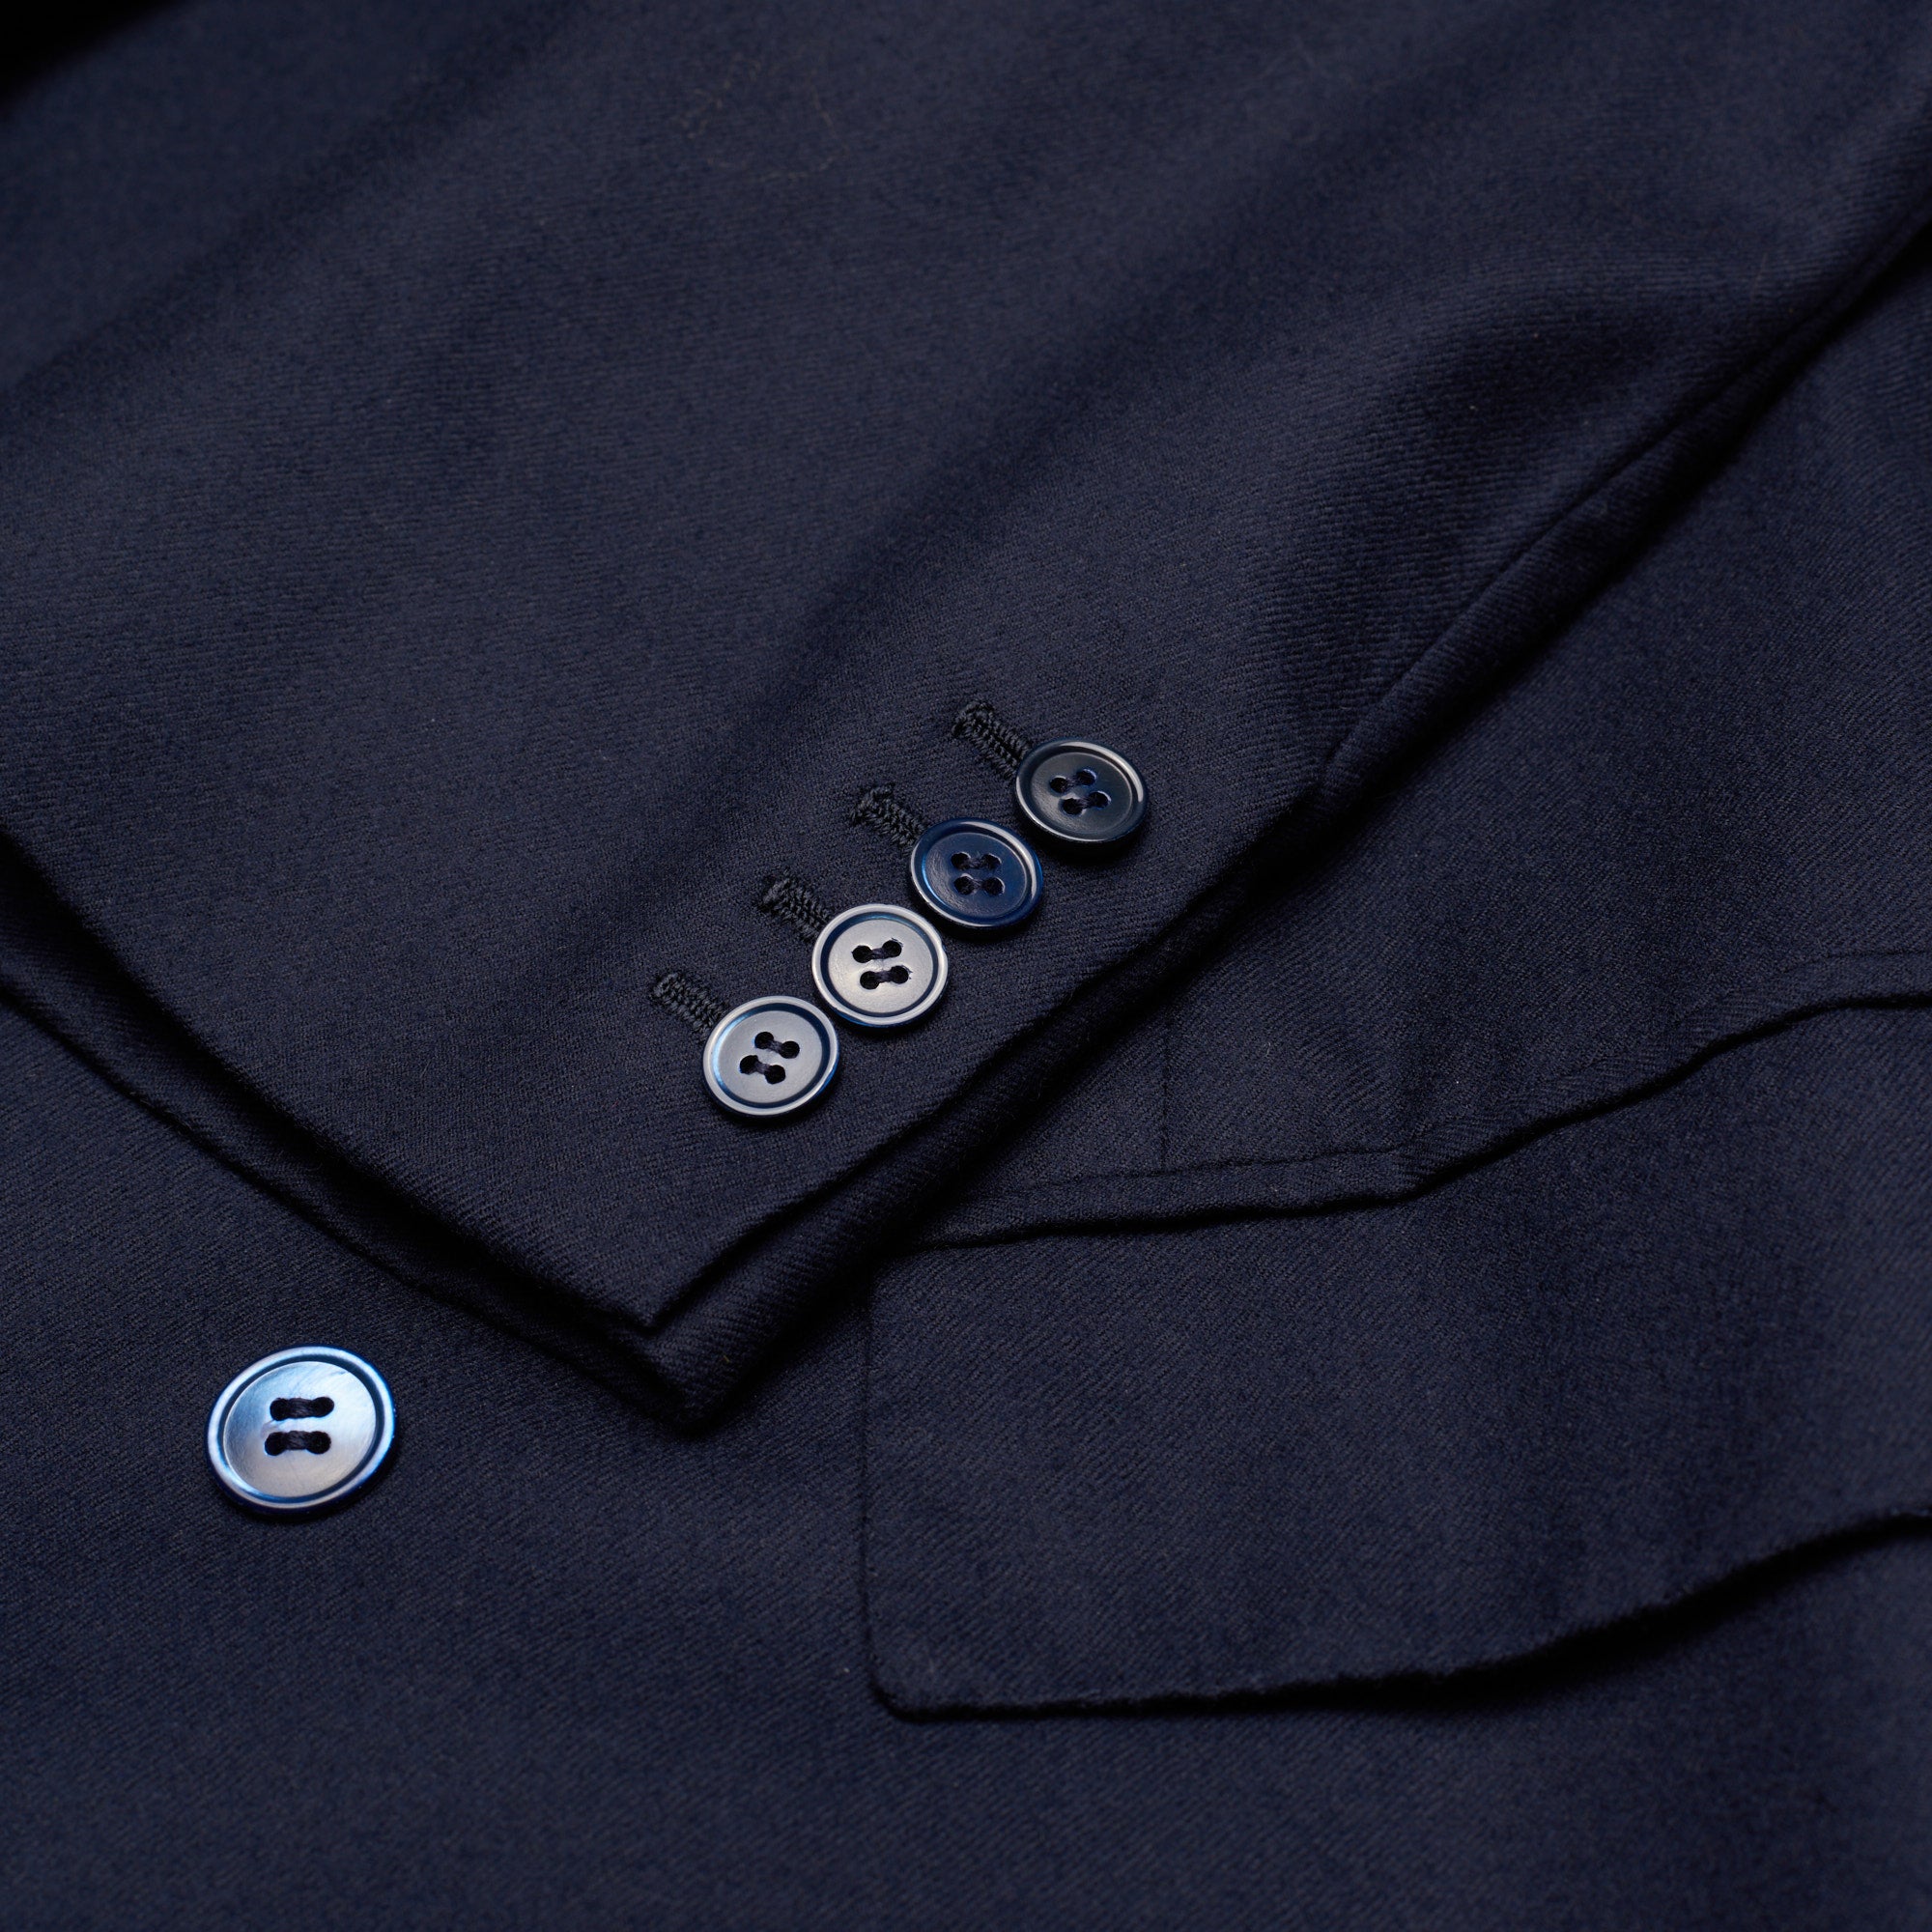 FALLAN & HARVEY LTD. Savile Row Bespoke Blazer Blue Wool DB Jacket US 42 FALLAN & HARVEY LTD.